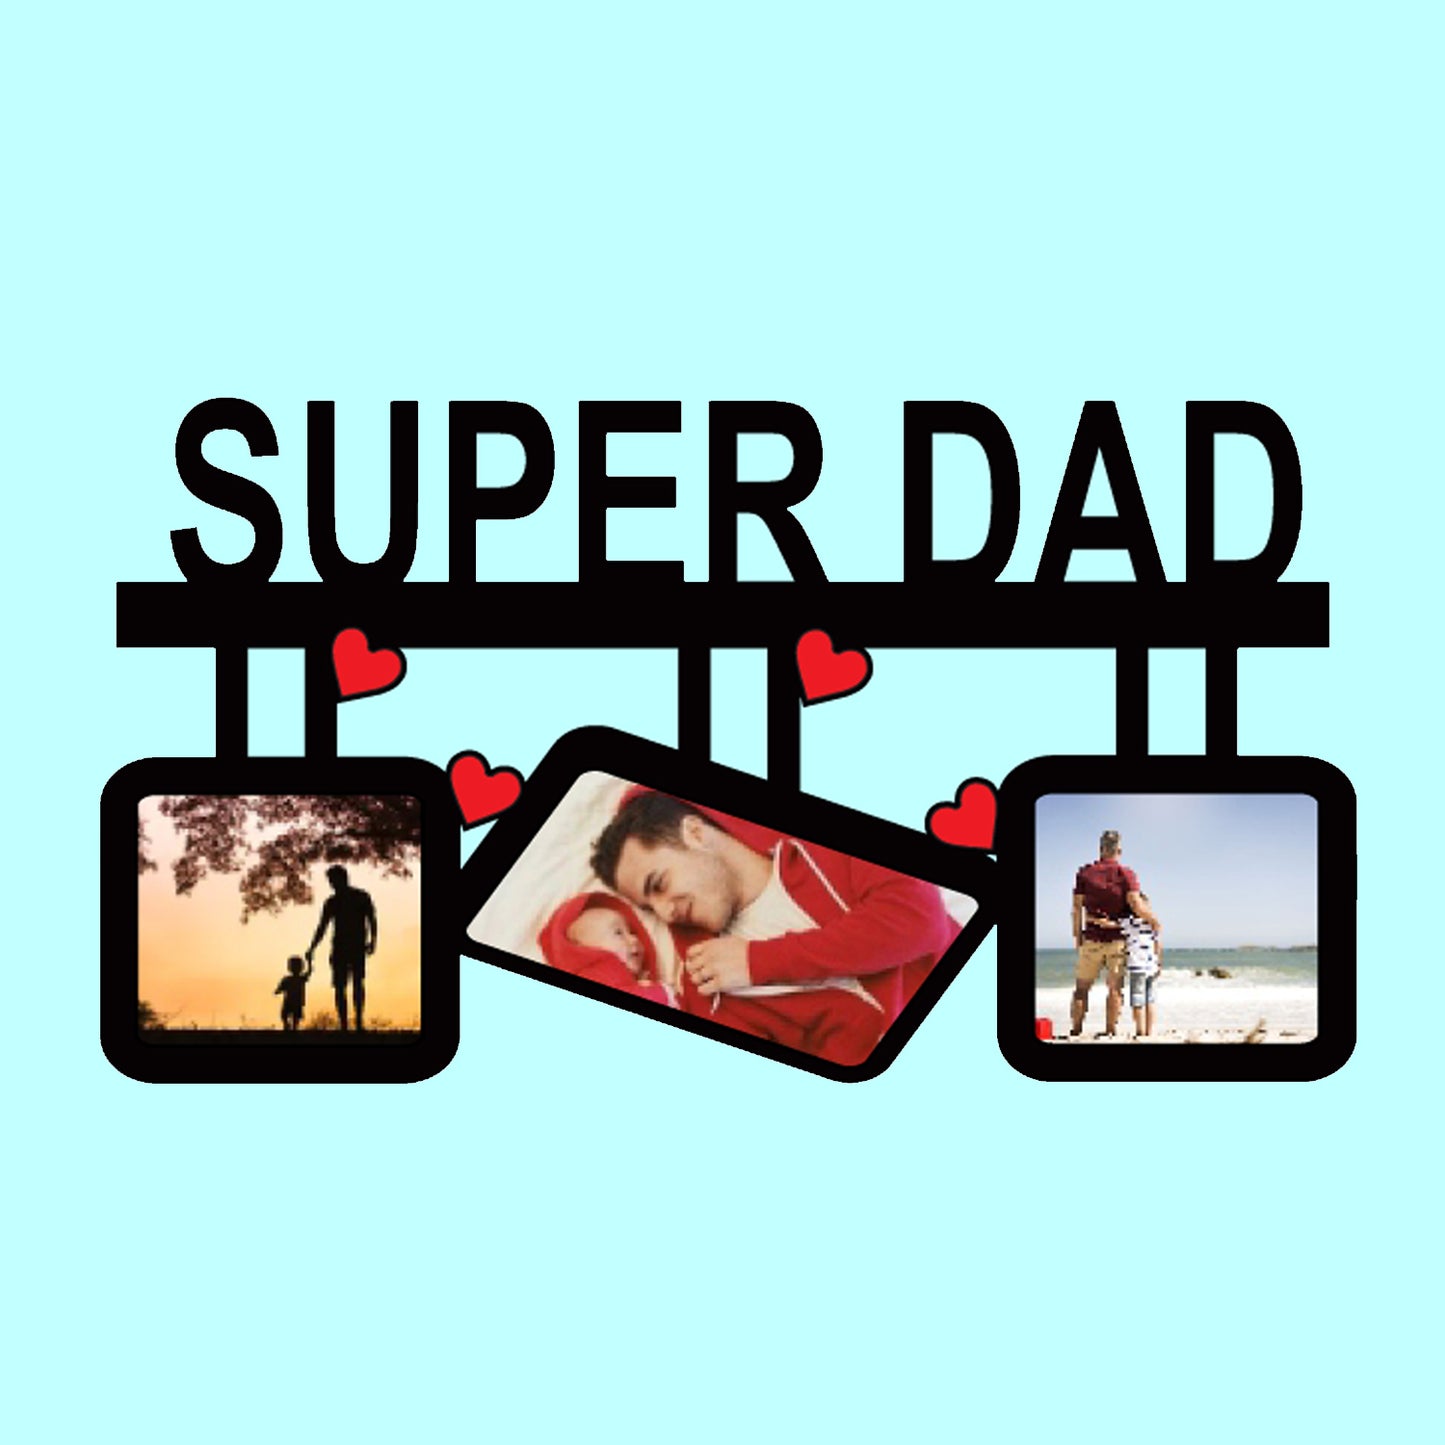 Super DAD wall frame